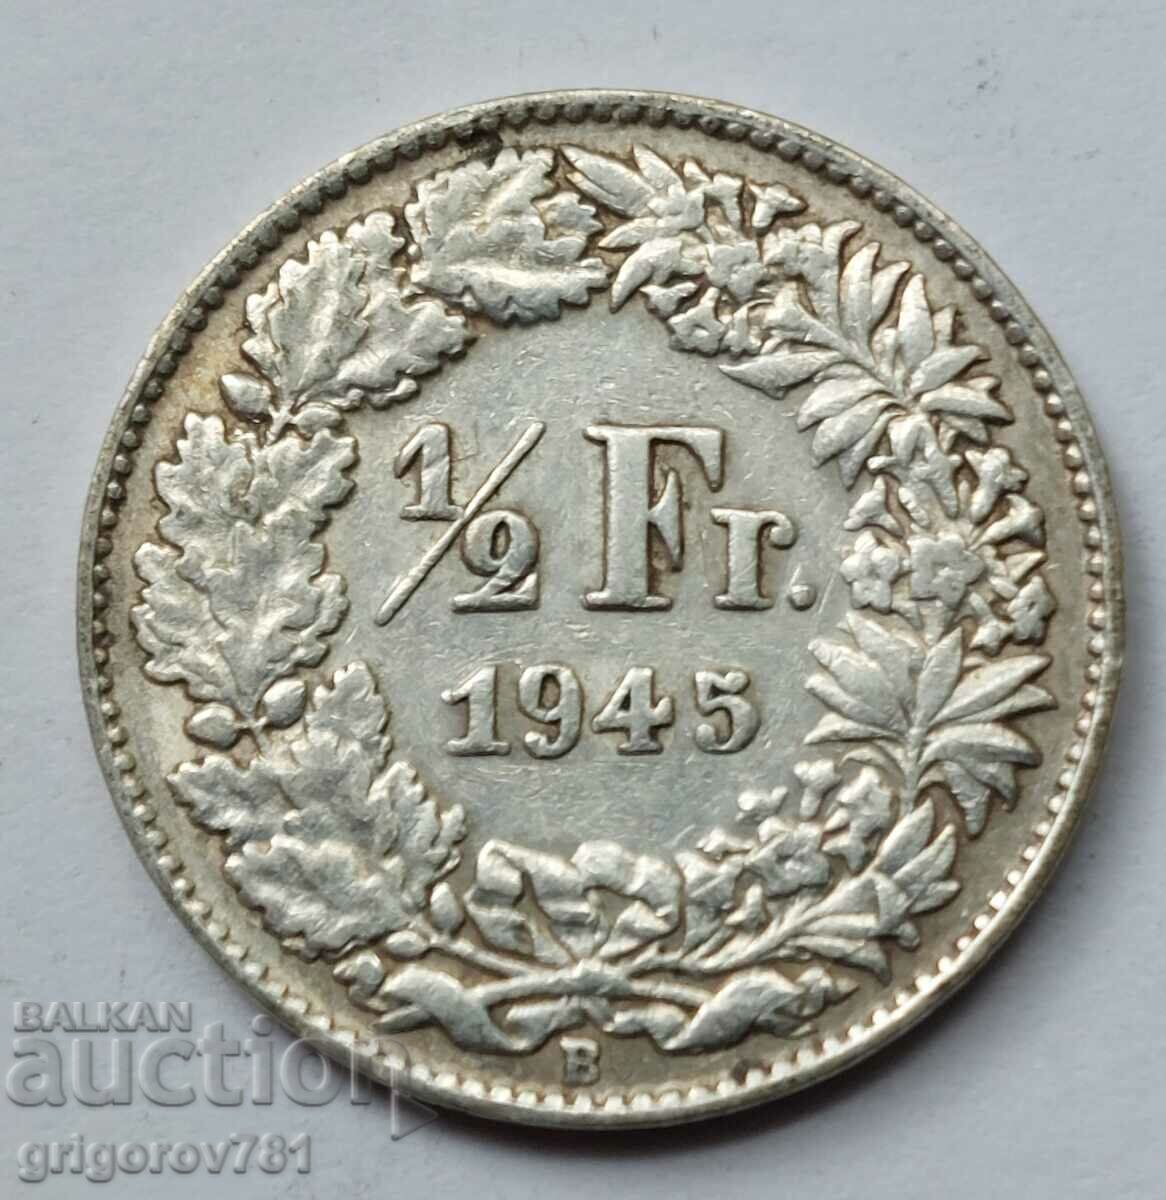 1/2 Franc Silver Switzerland 1945 B - Silver Coin #40